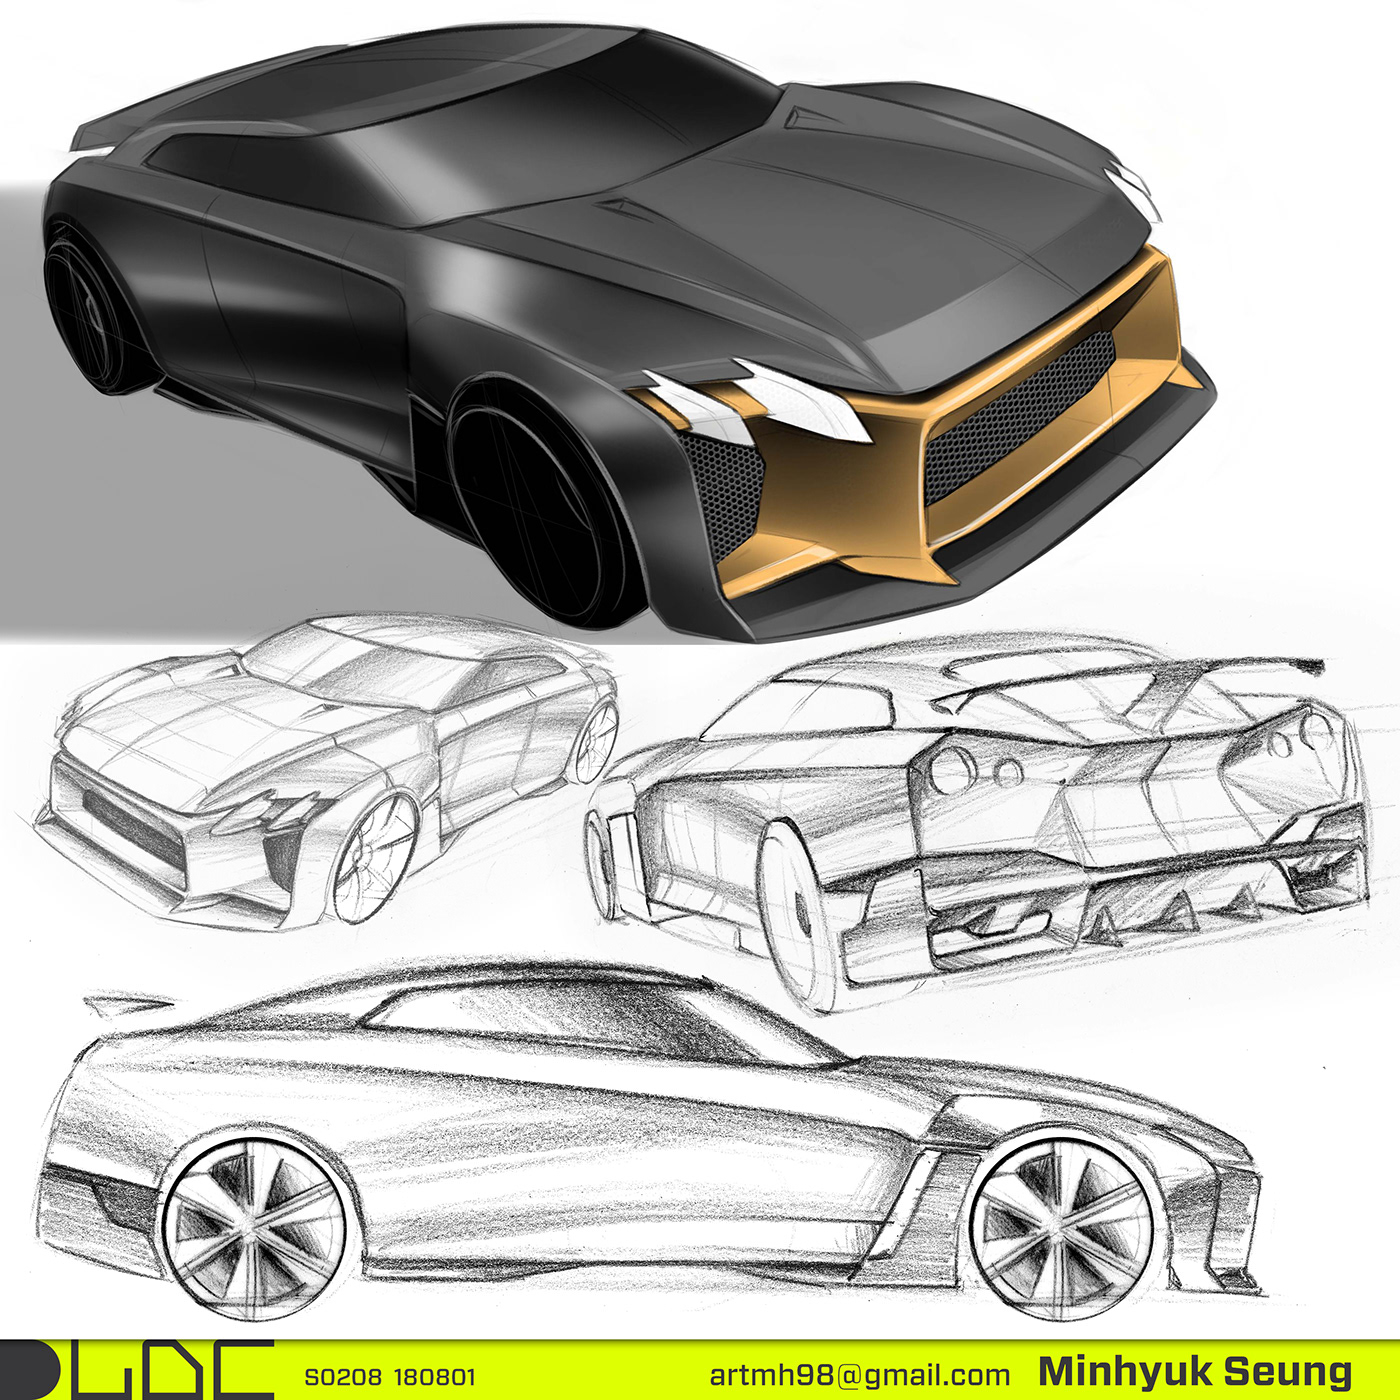 photoshop car design bike design rendering Automotive design product design  sketch car motocycle motorcycle design